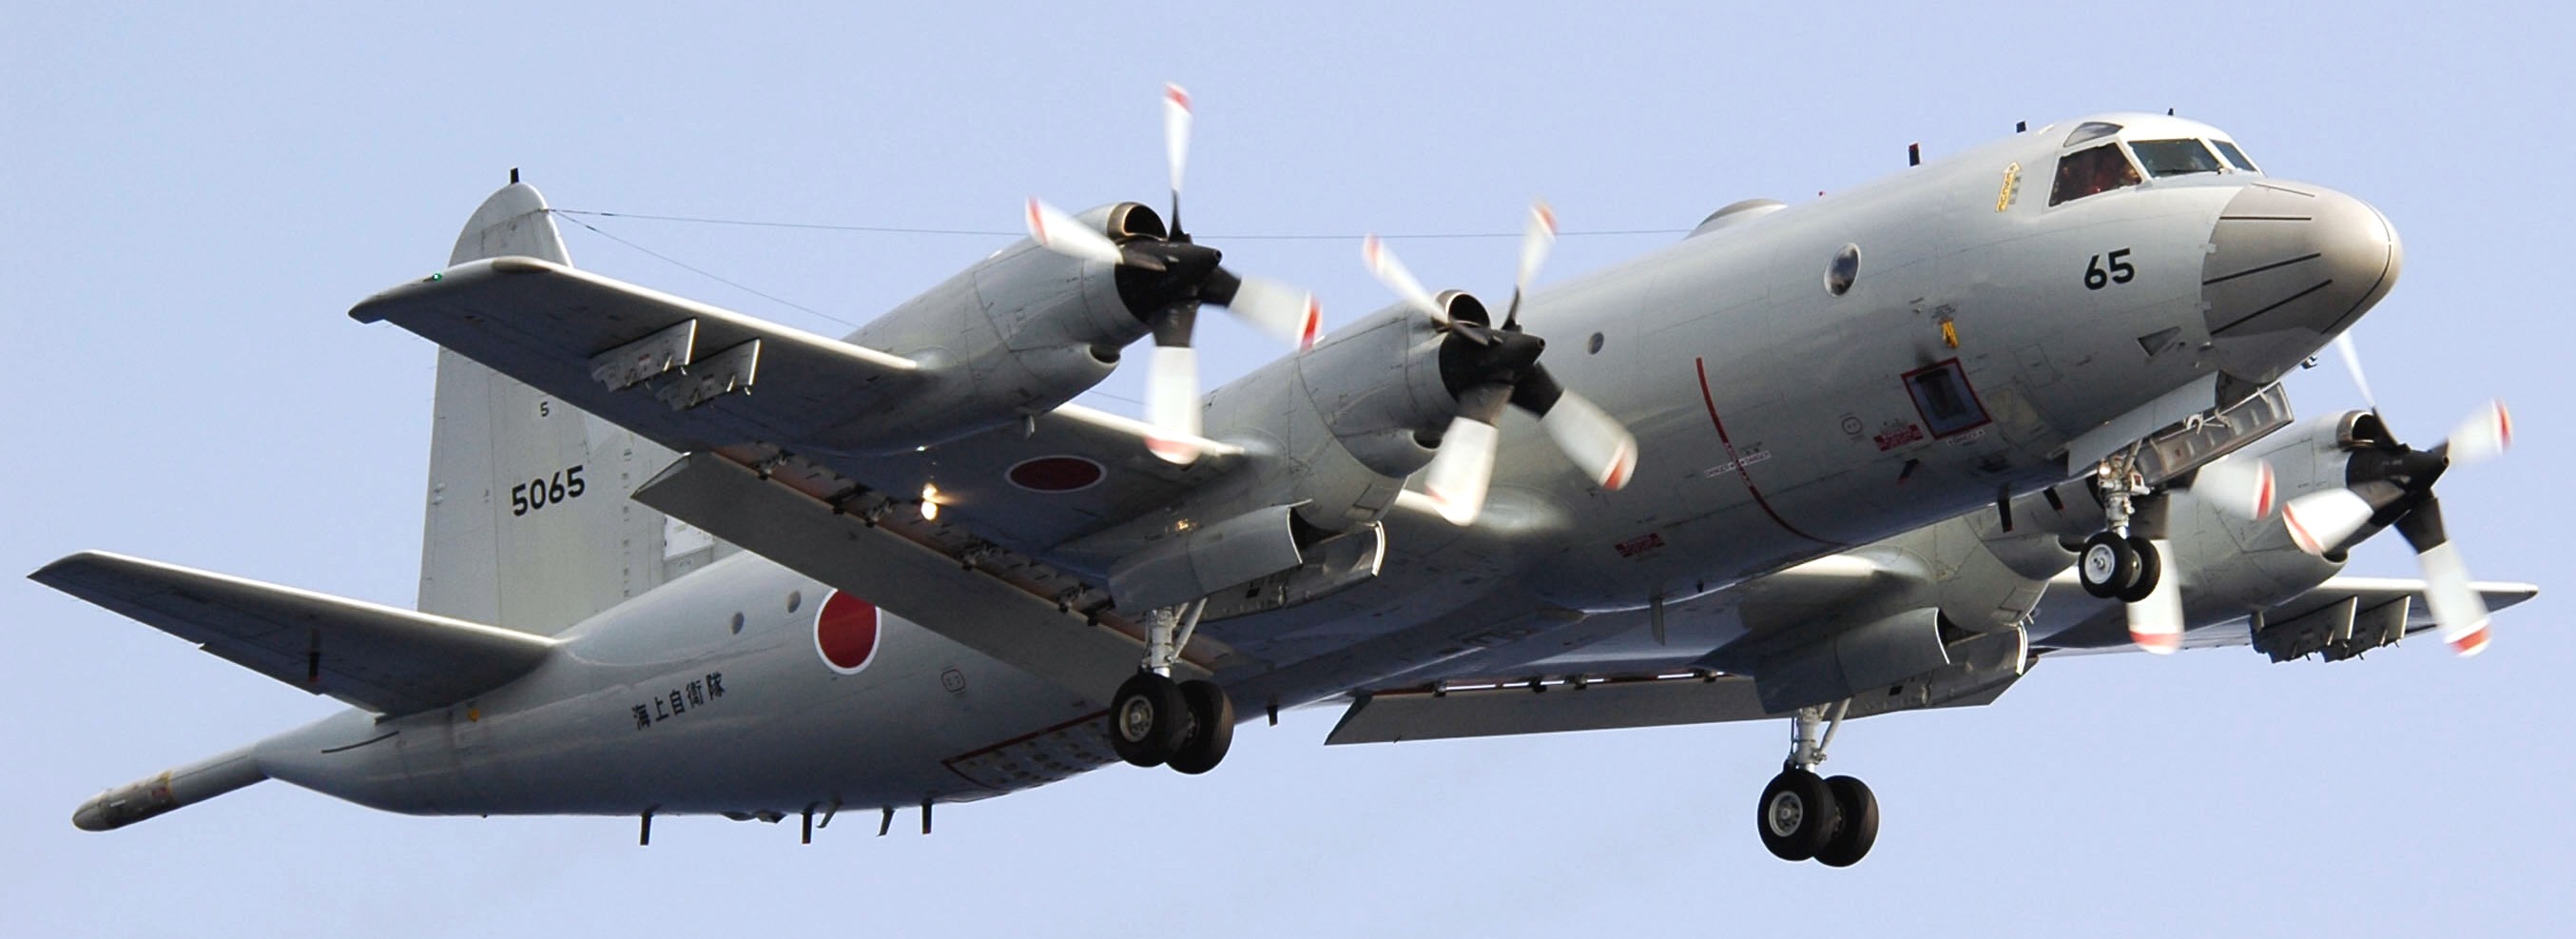 kawasaki p-3c orion patrol aircraft mpa japan maritime self defense force jmsdf 5065 05